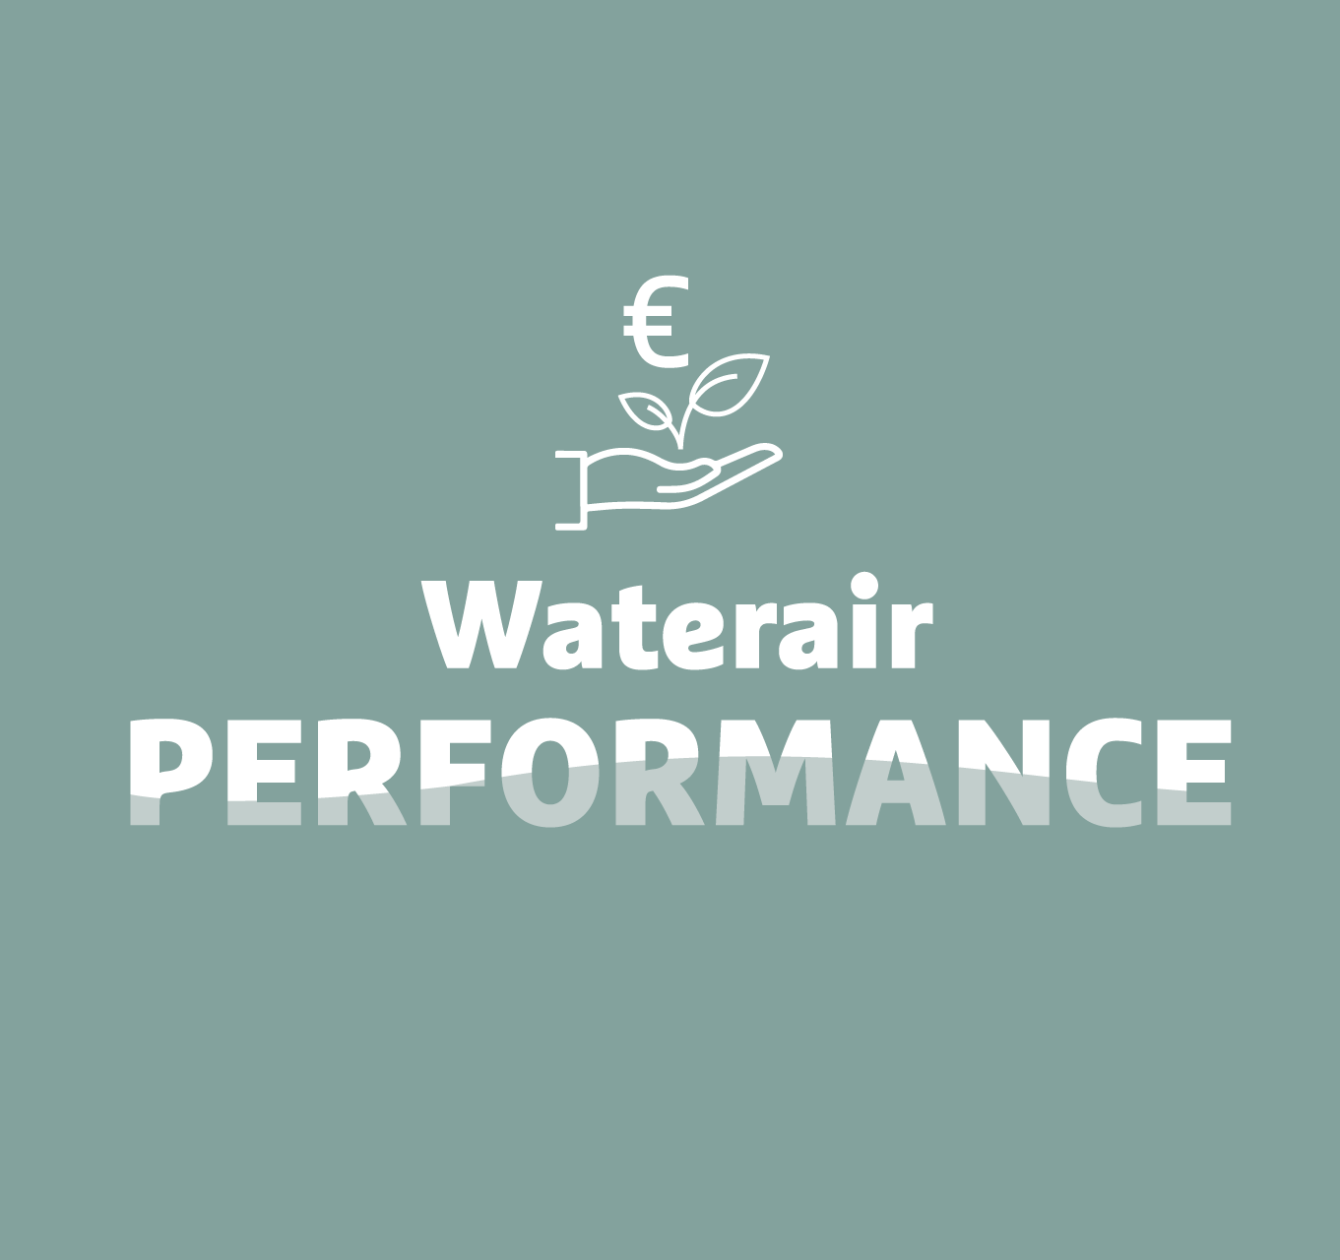 Waterair Performance: vaš ekonomičan i ekološki odgovoran bazen.